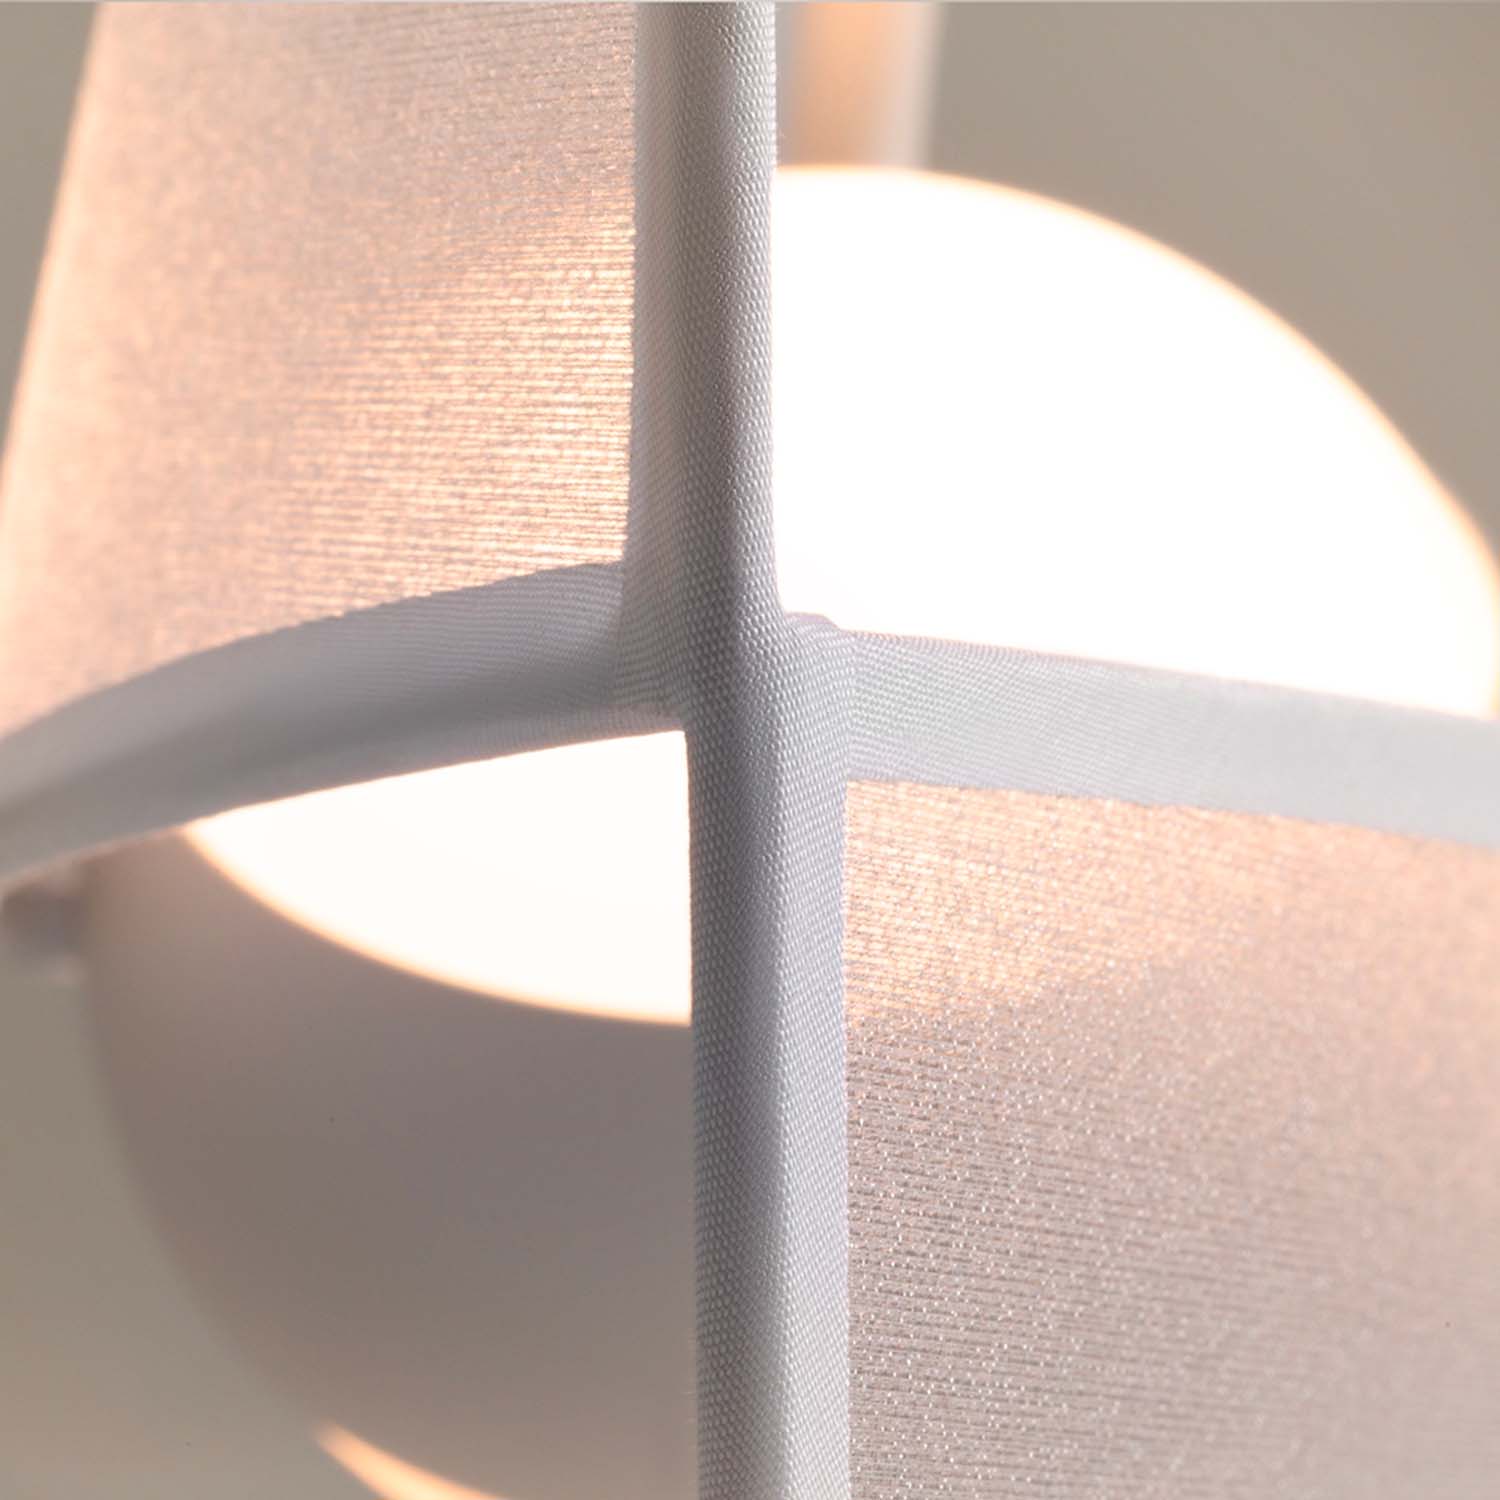 REFLEX - Design white disc space pendant lamp